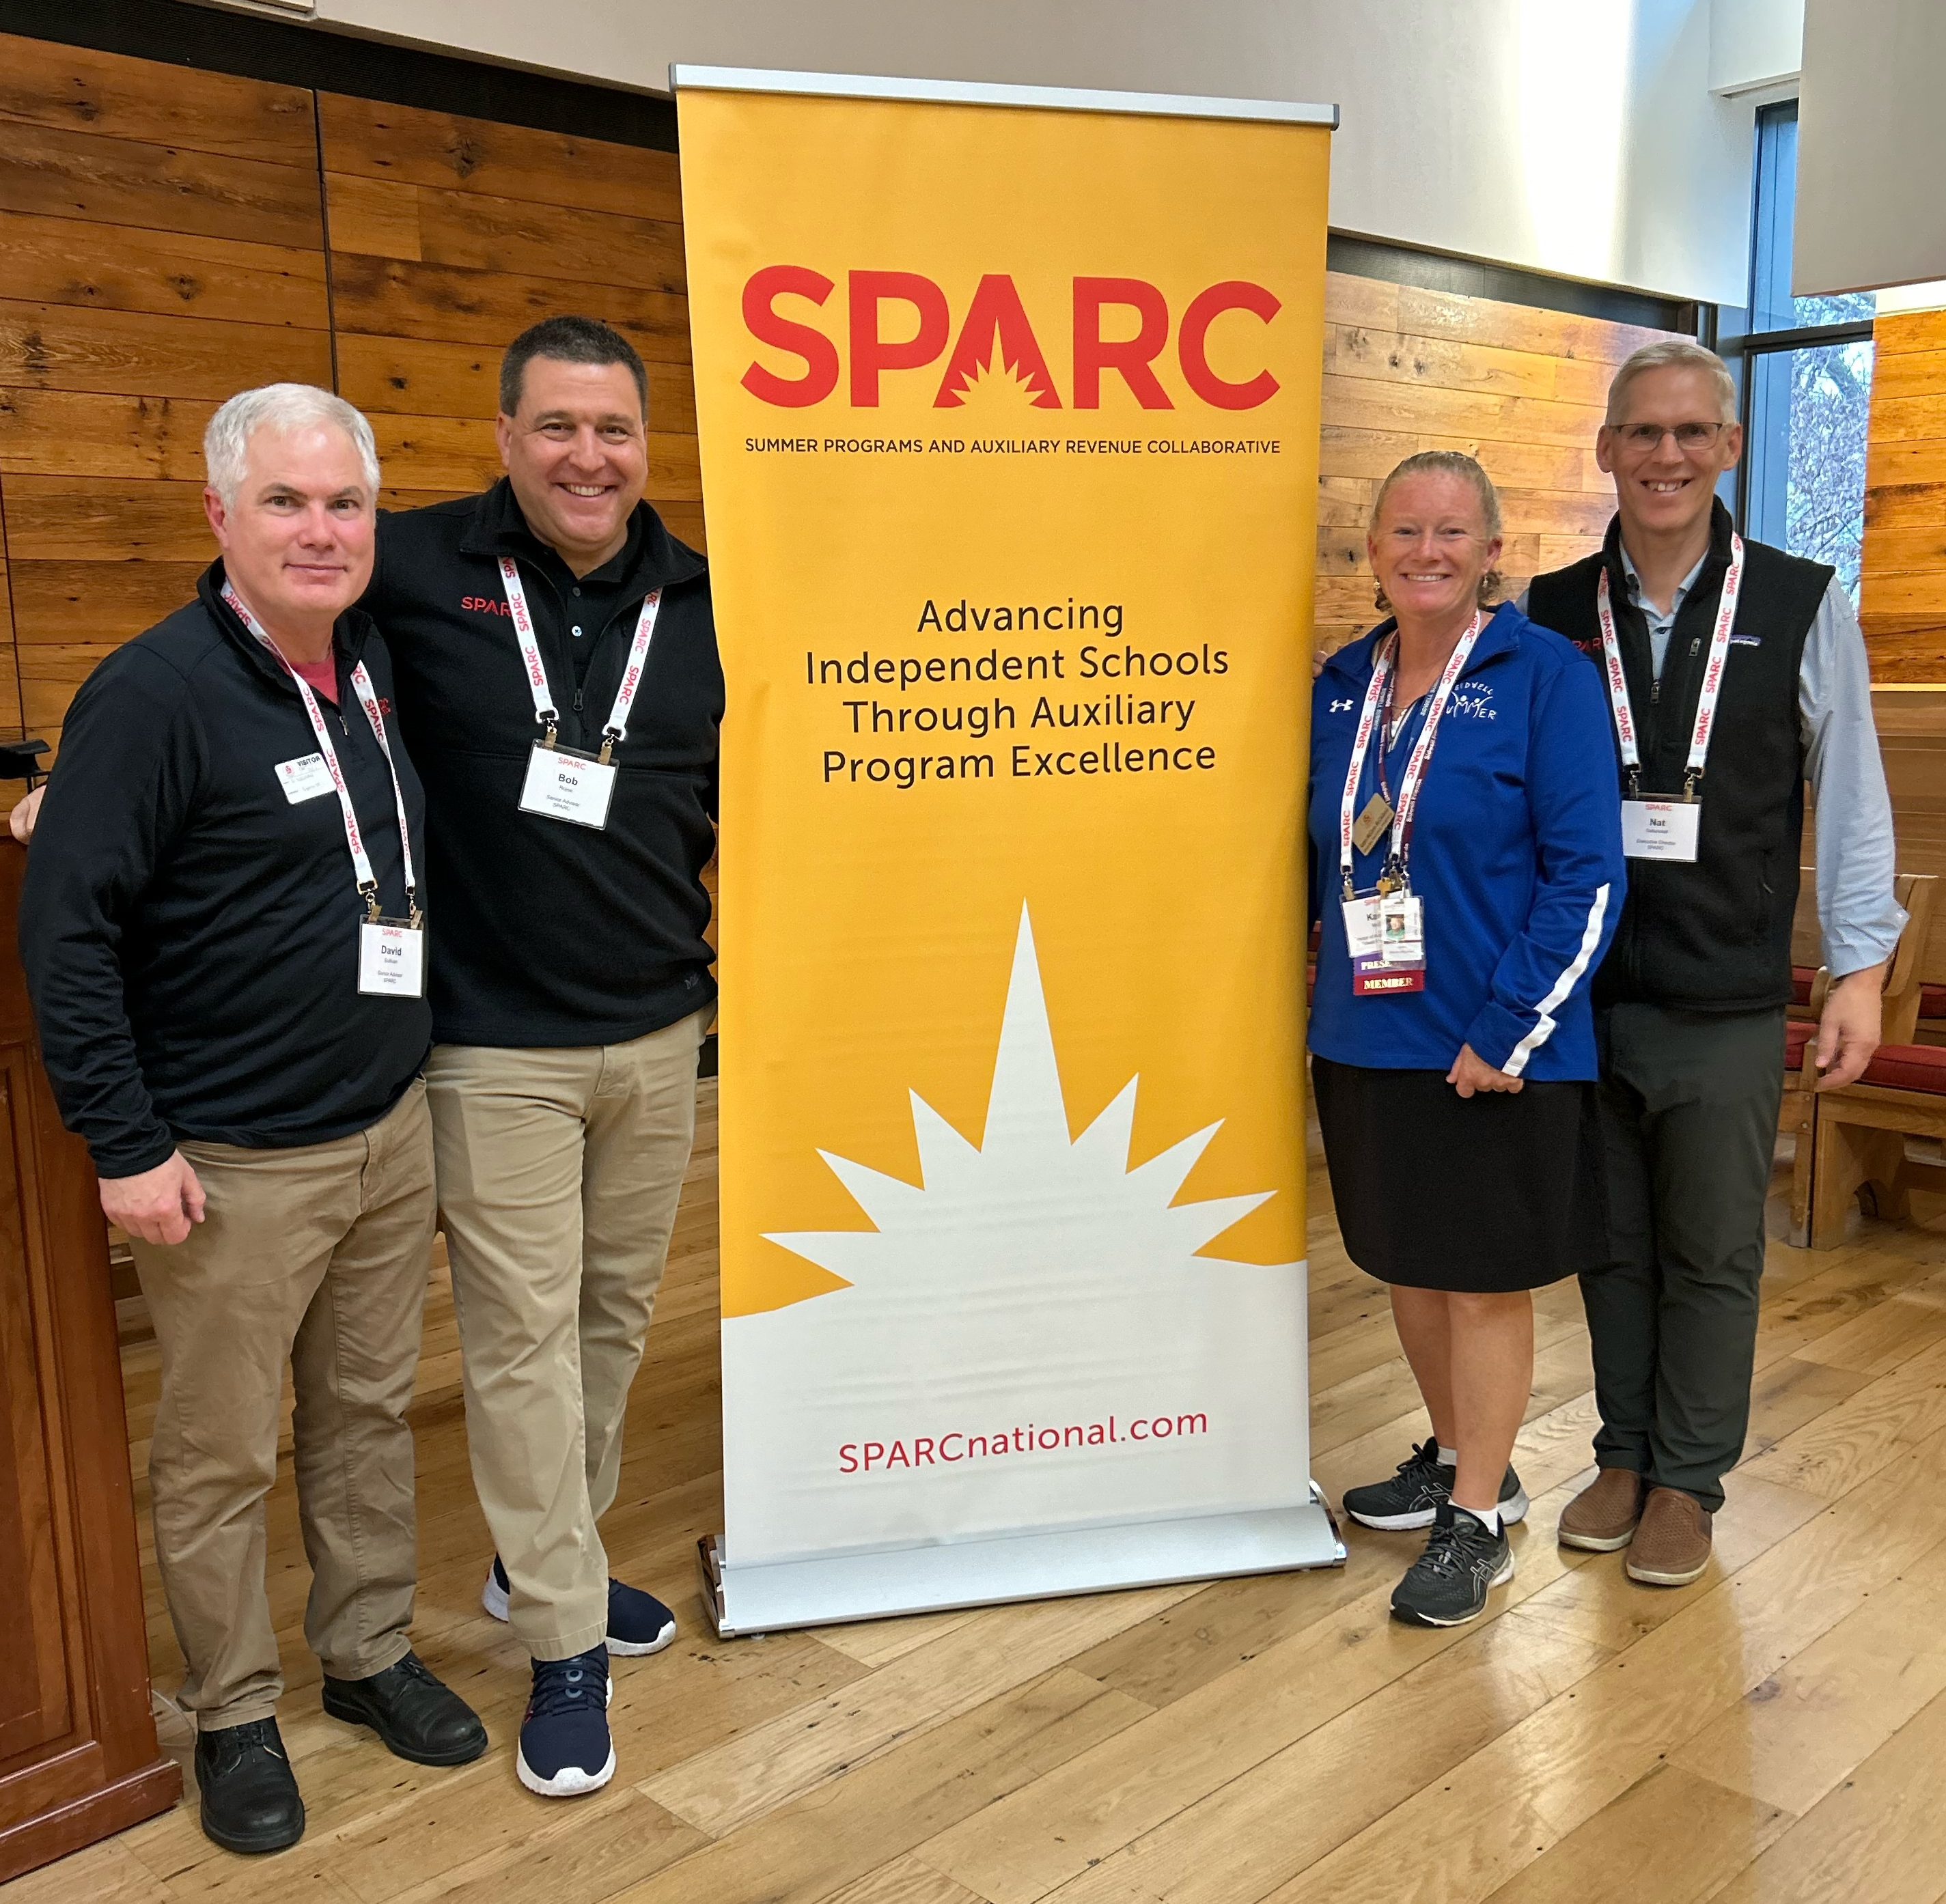 SPARC Team presenting at workshop